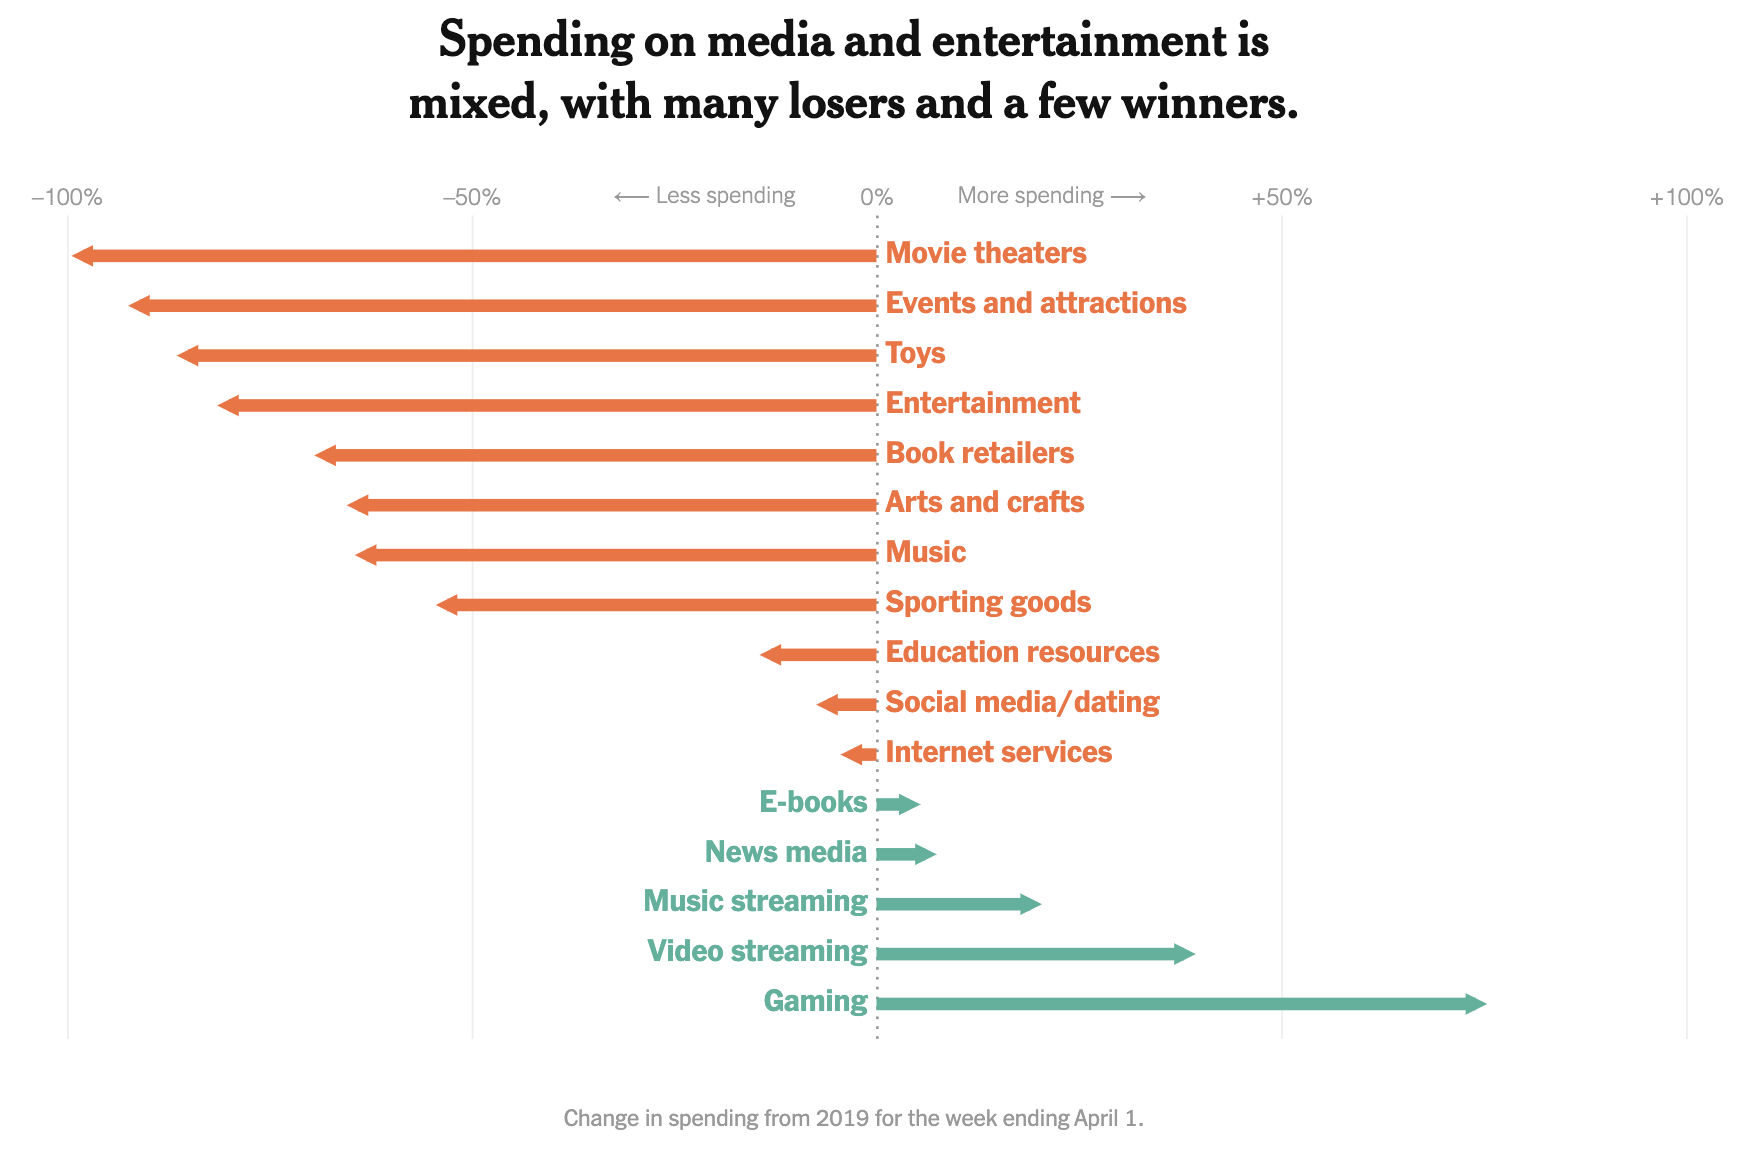 Spending on media during COVID-19